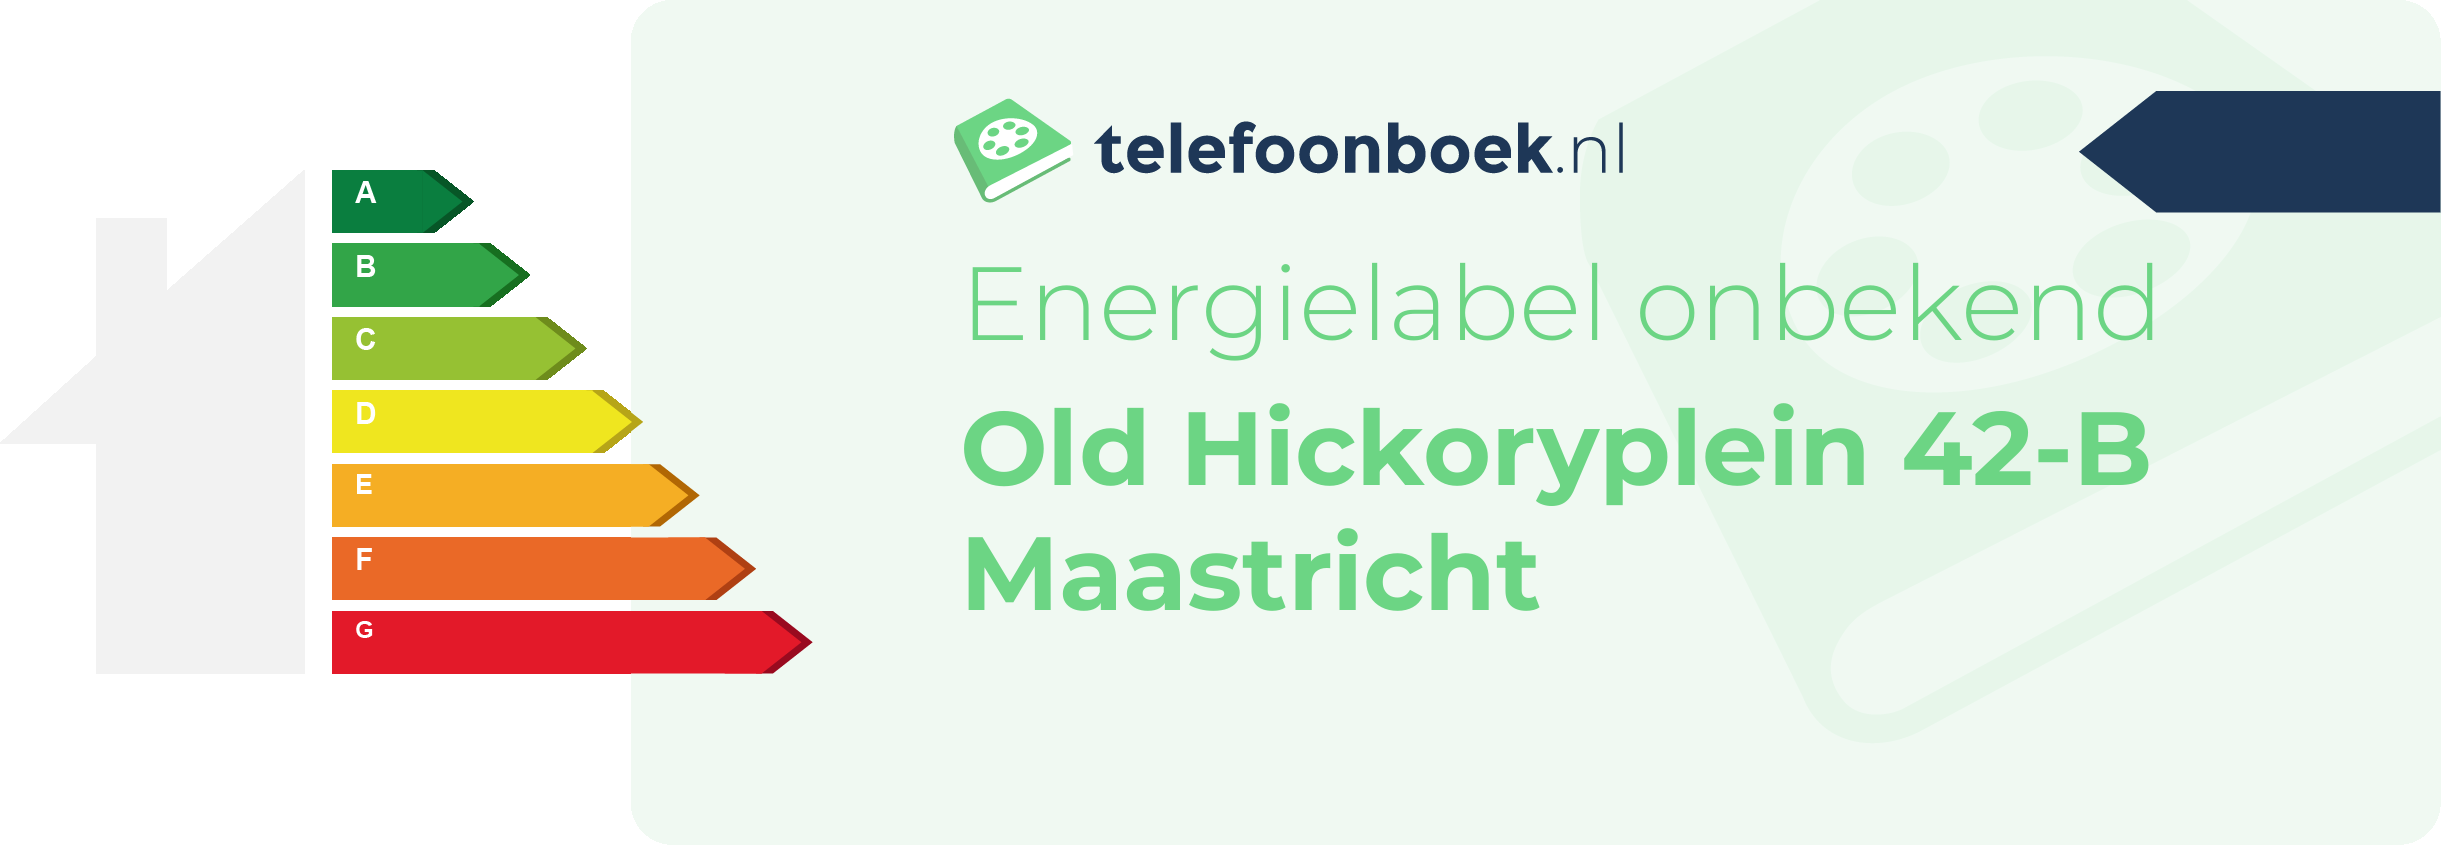 Energielabel Old Hickoryplein 42-B Maastricht